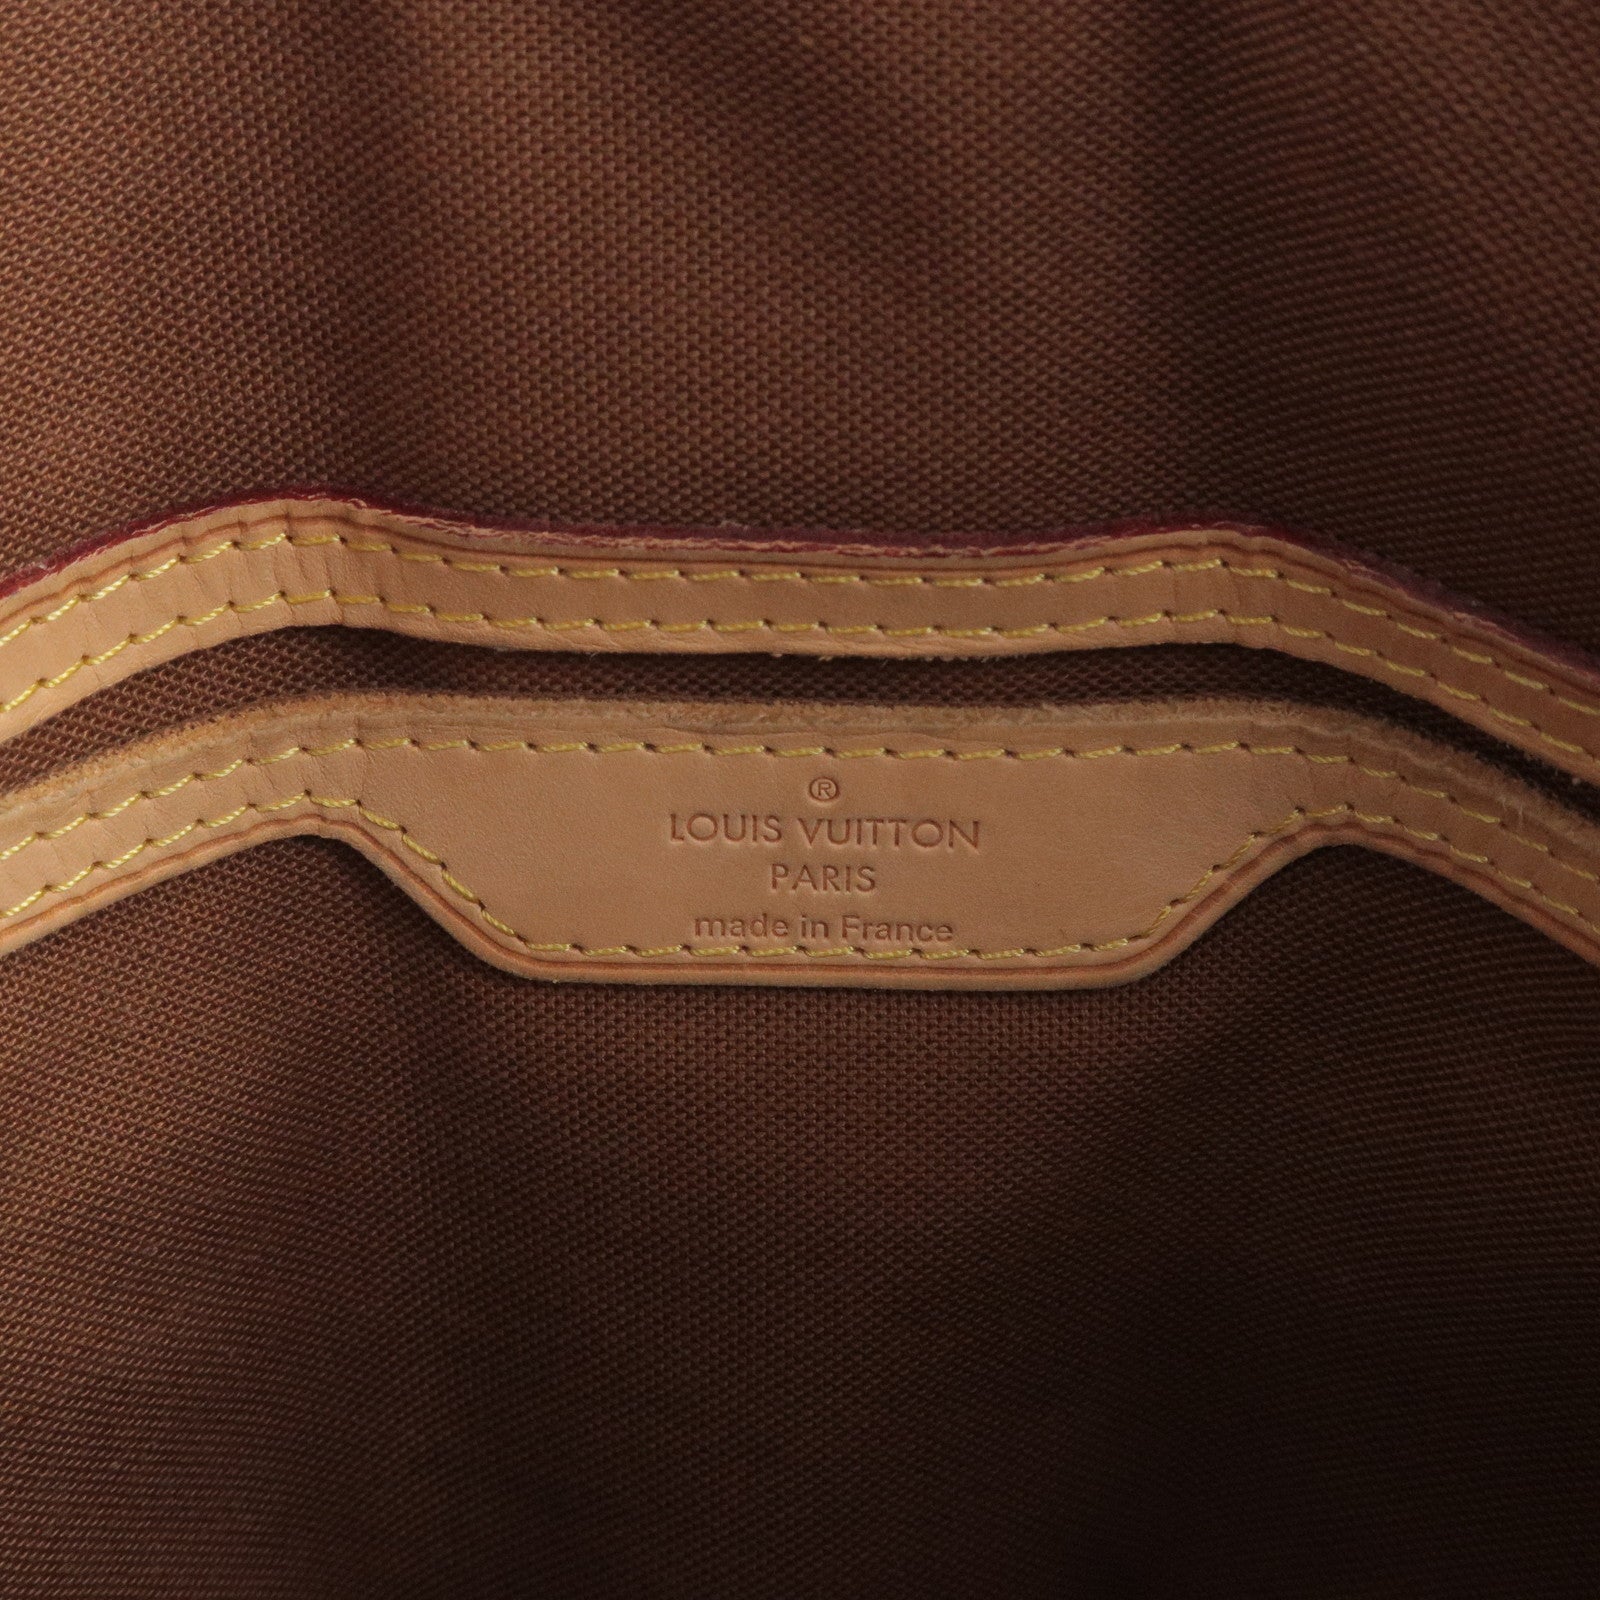 My favourite brand Louis Vuitton Everywhere - 2way - Louis - Bag